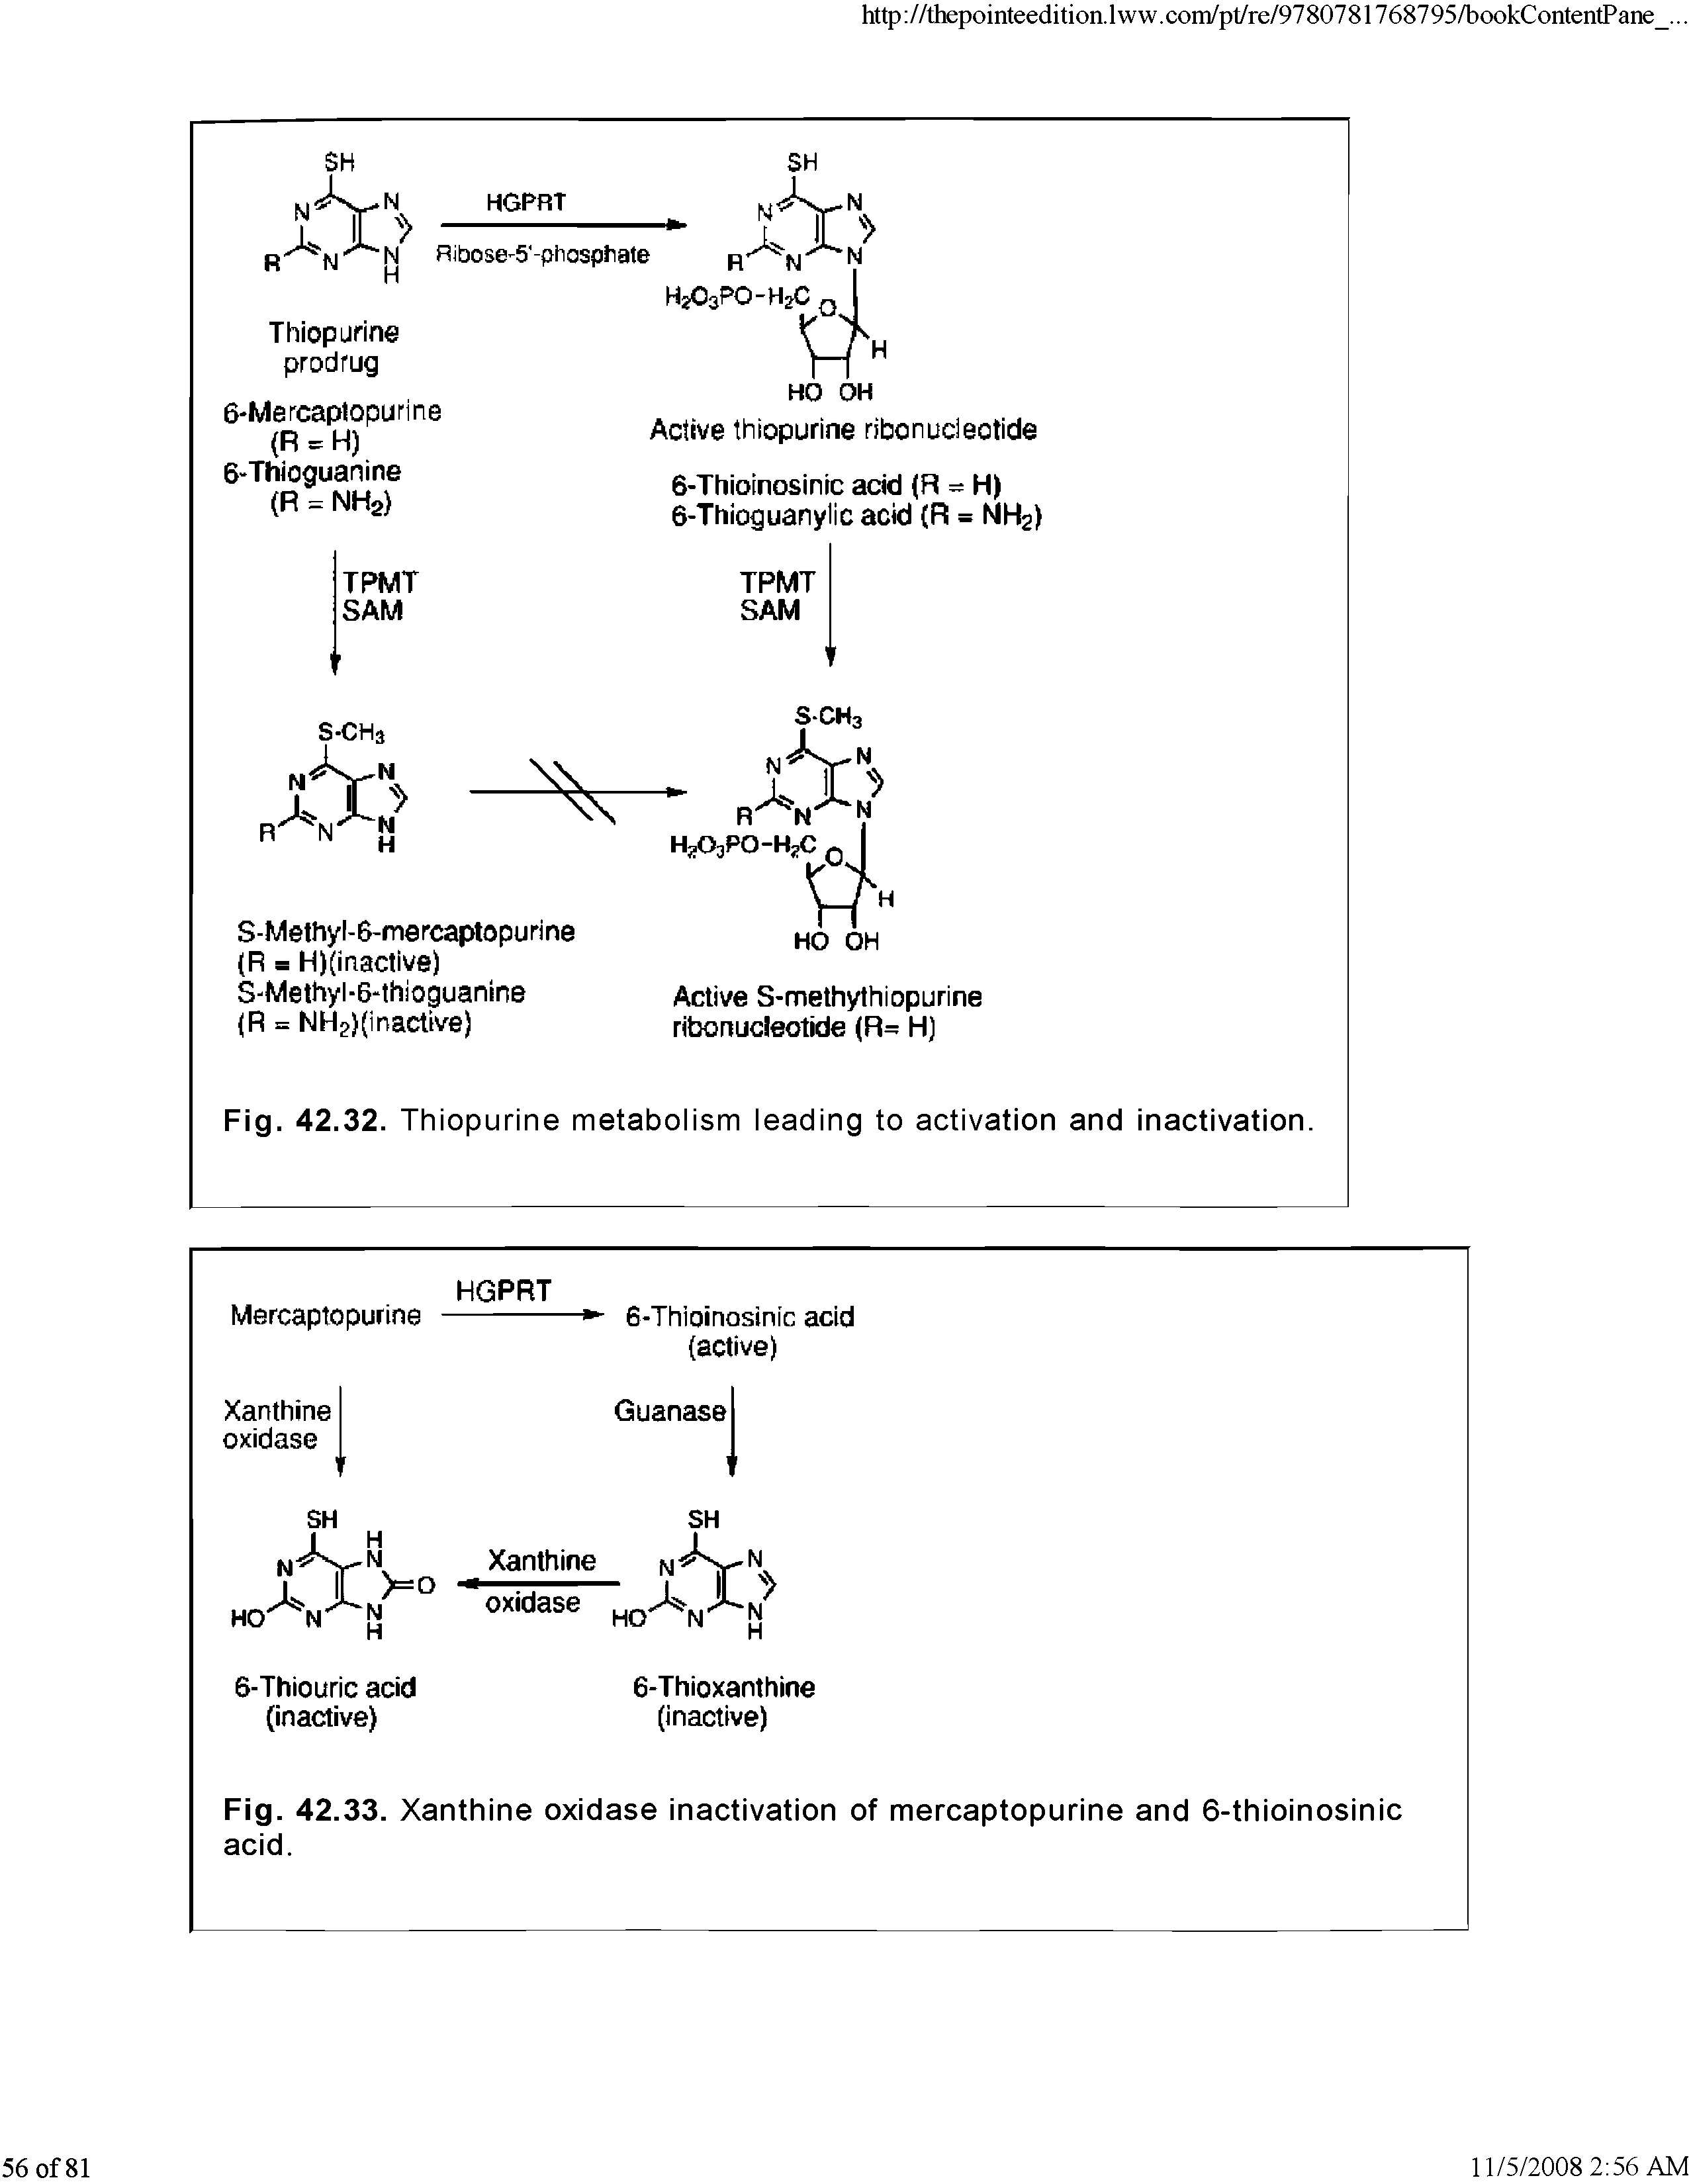 Fig. 42.33. Xanthine oxidase inactivation of mercaptopurine and 6-thioinosinic acid.